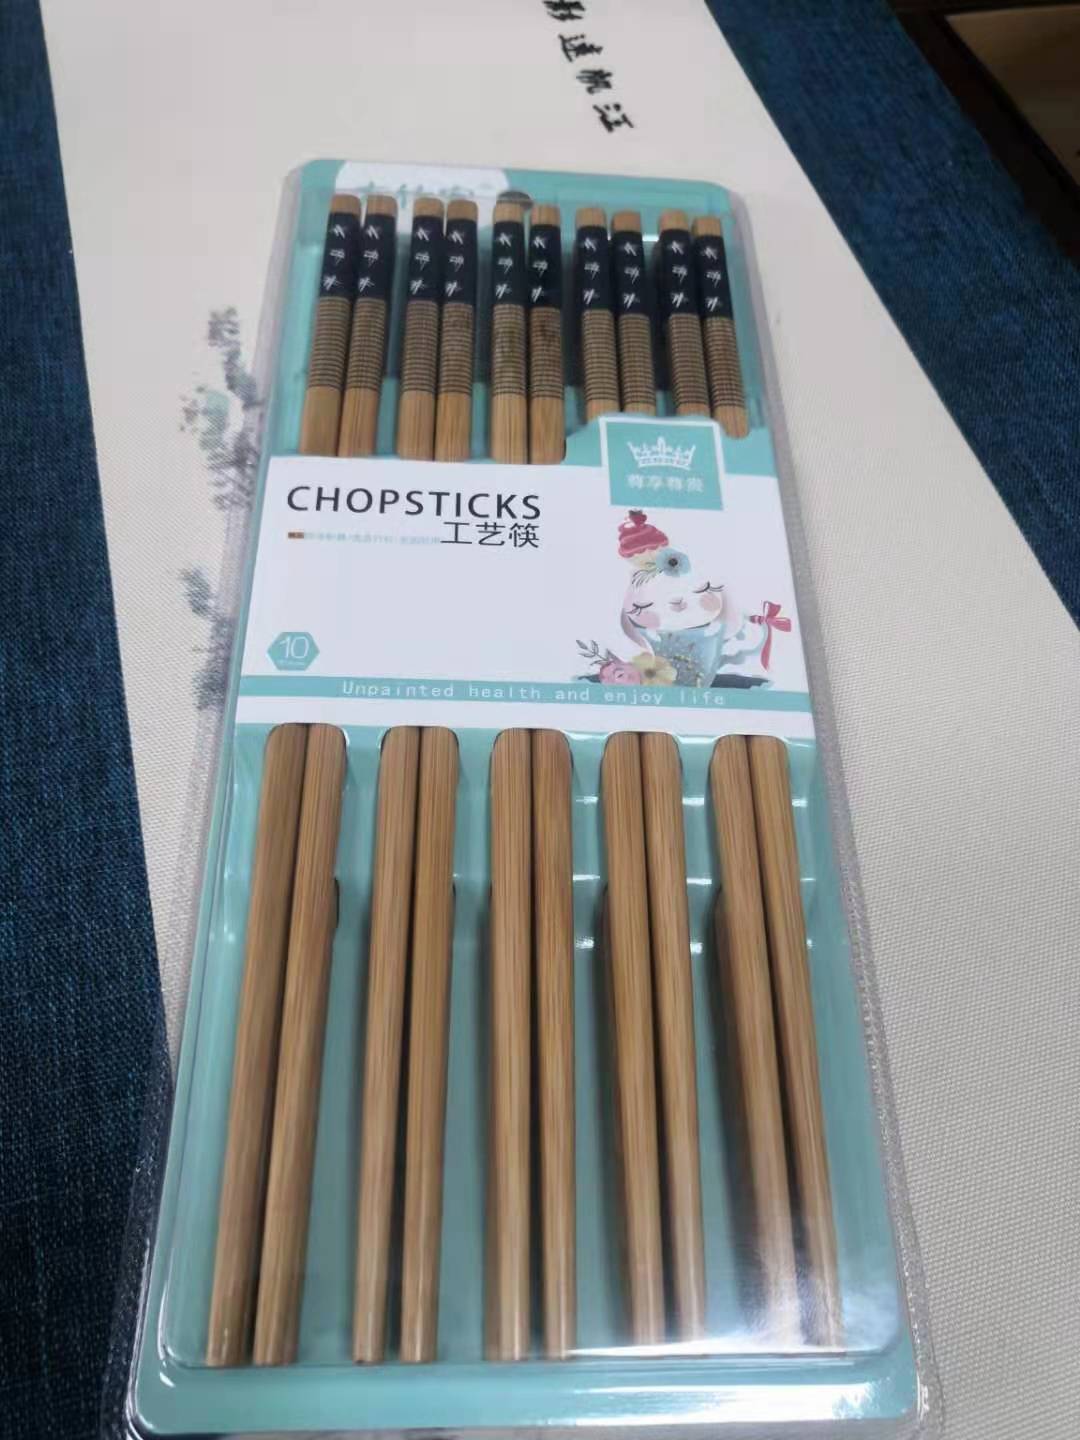 Commercial chopsticks